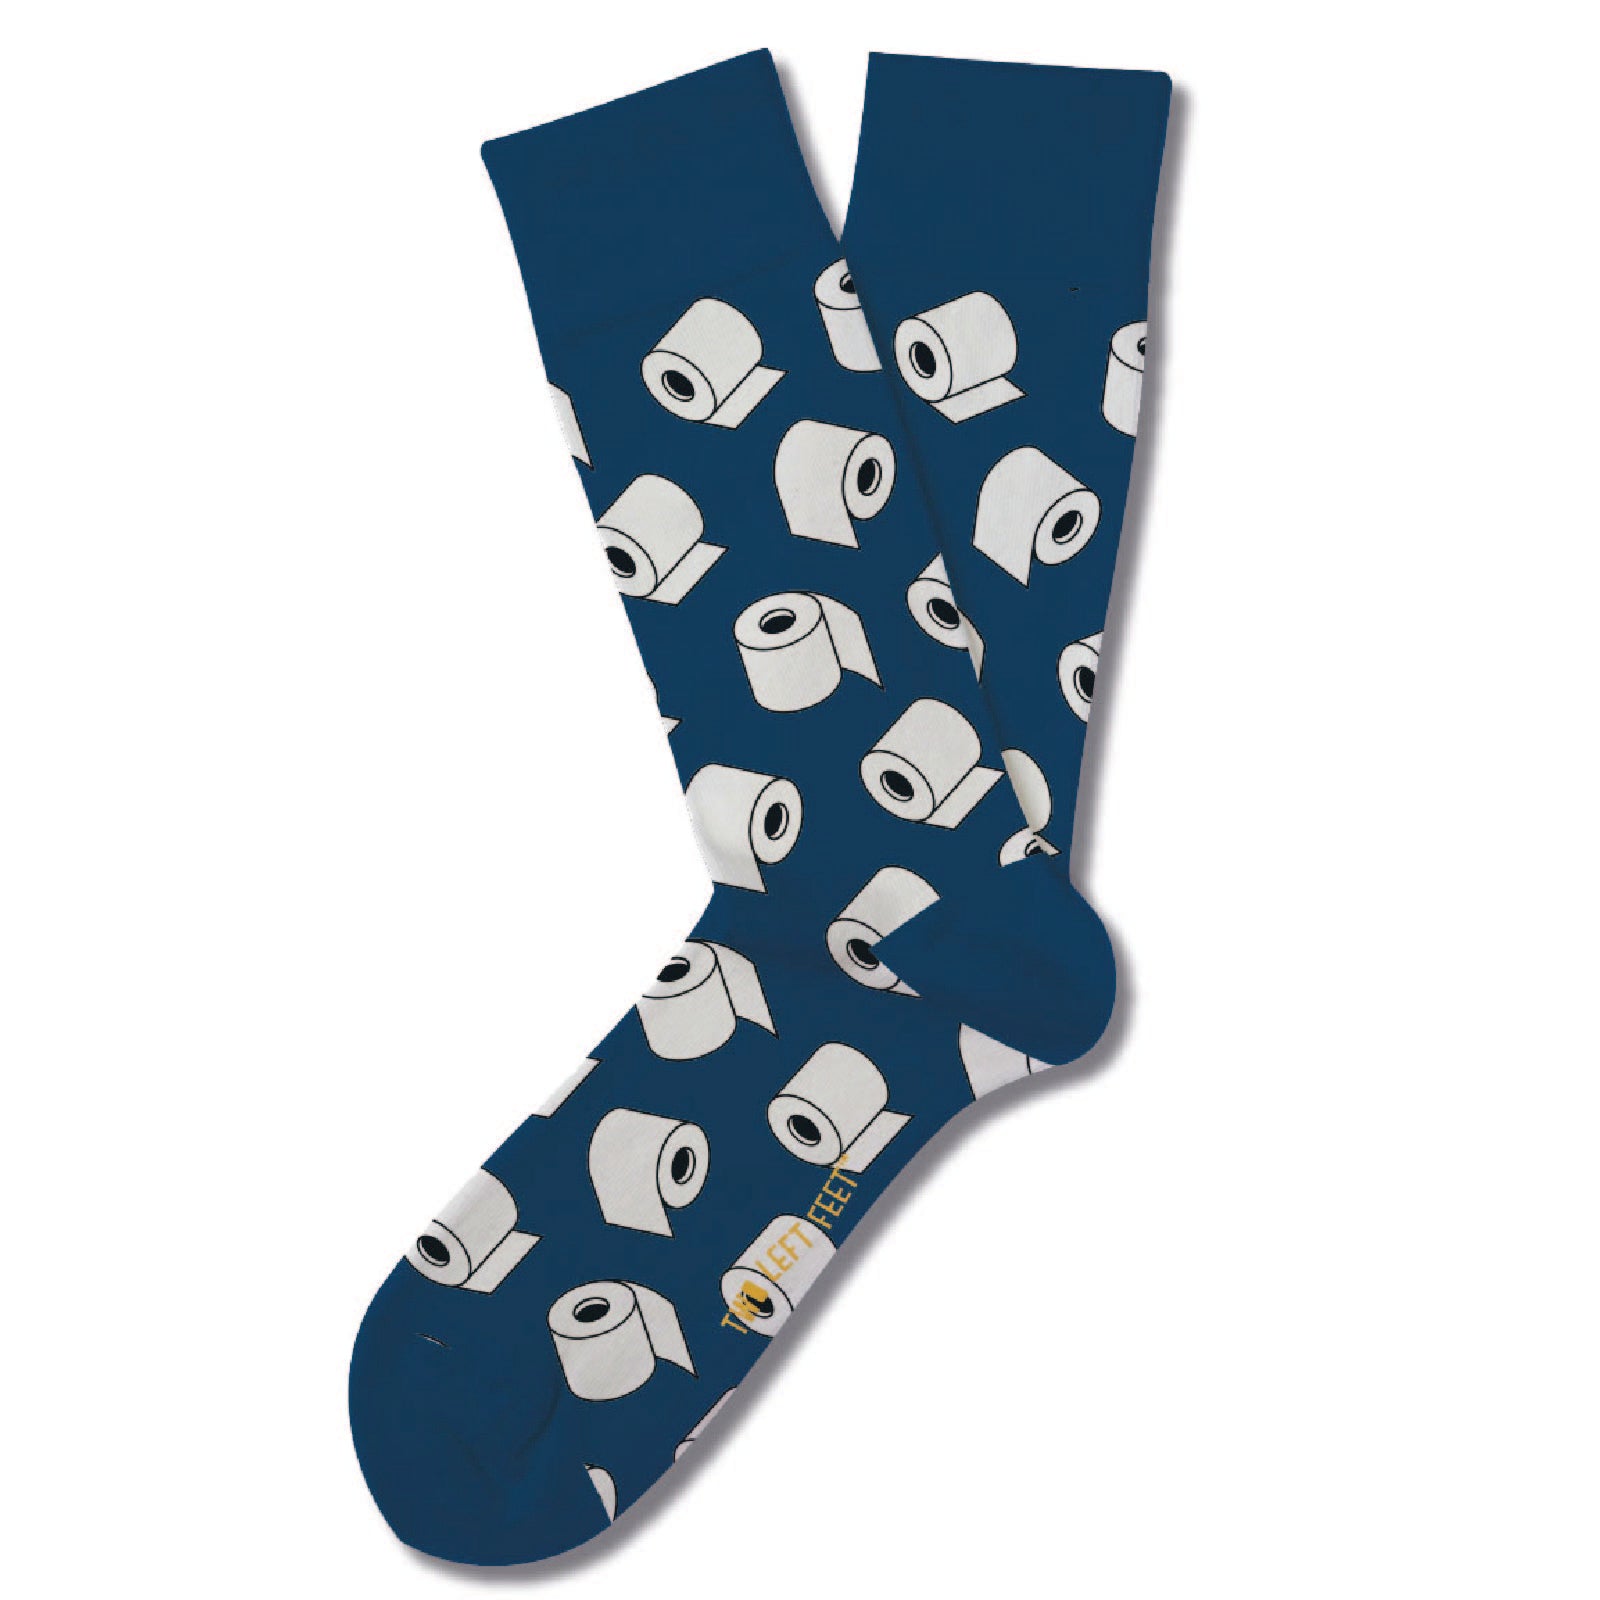 "On A Roll" Two Left Feet Socks fun printed toilet paper pattern print cotton spandex sock